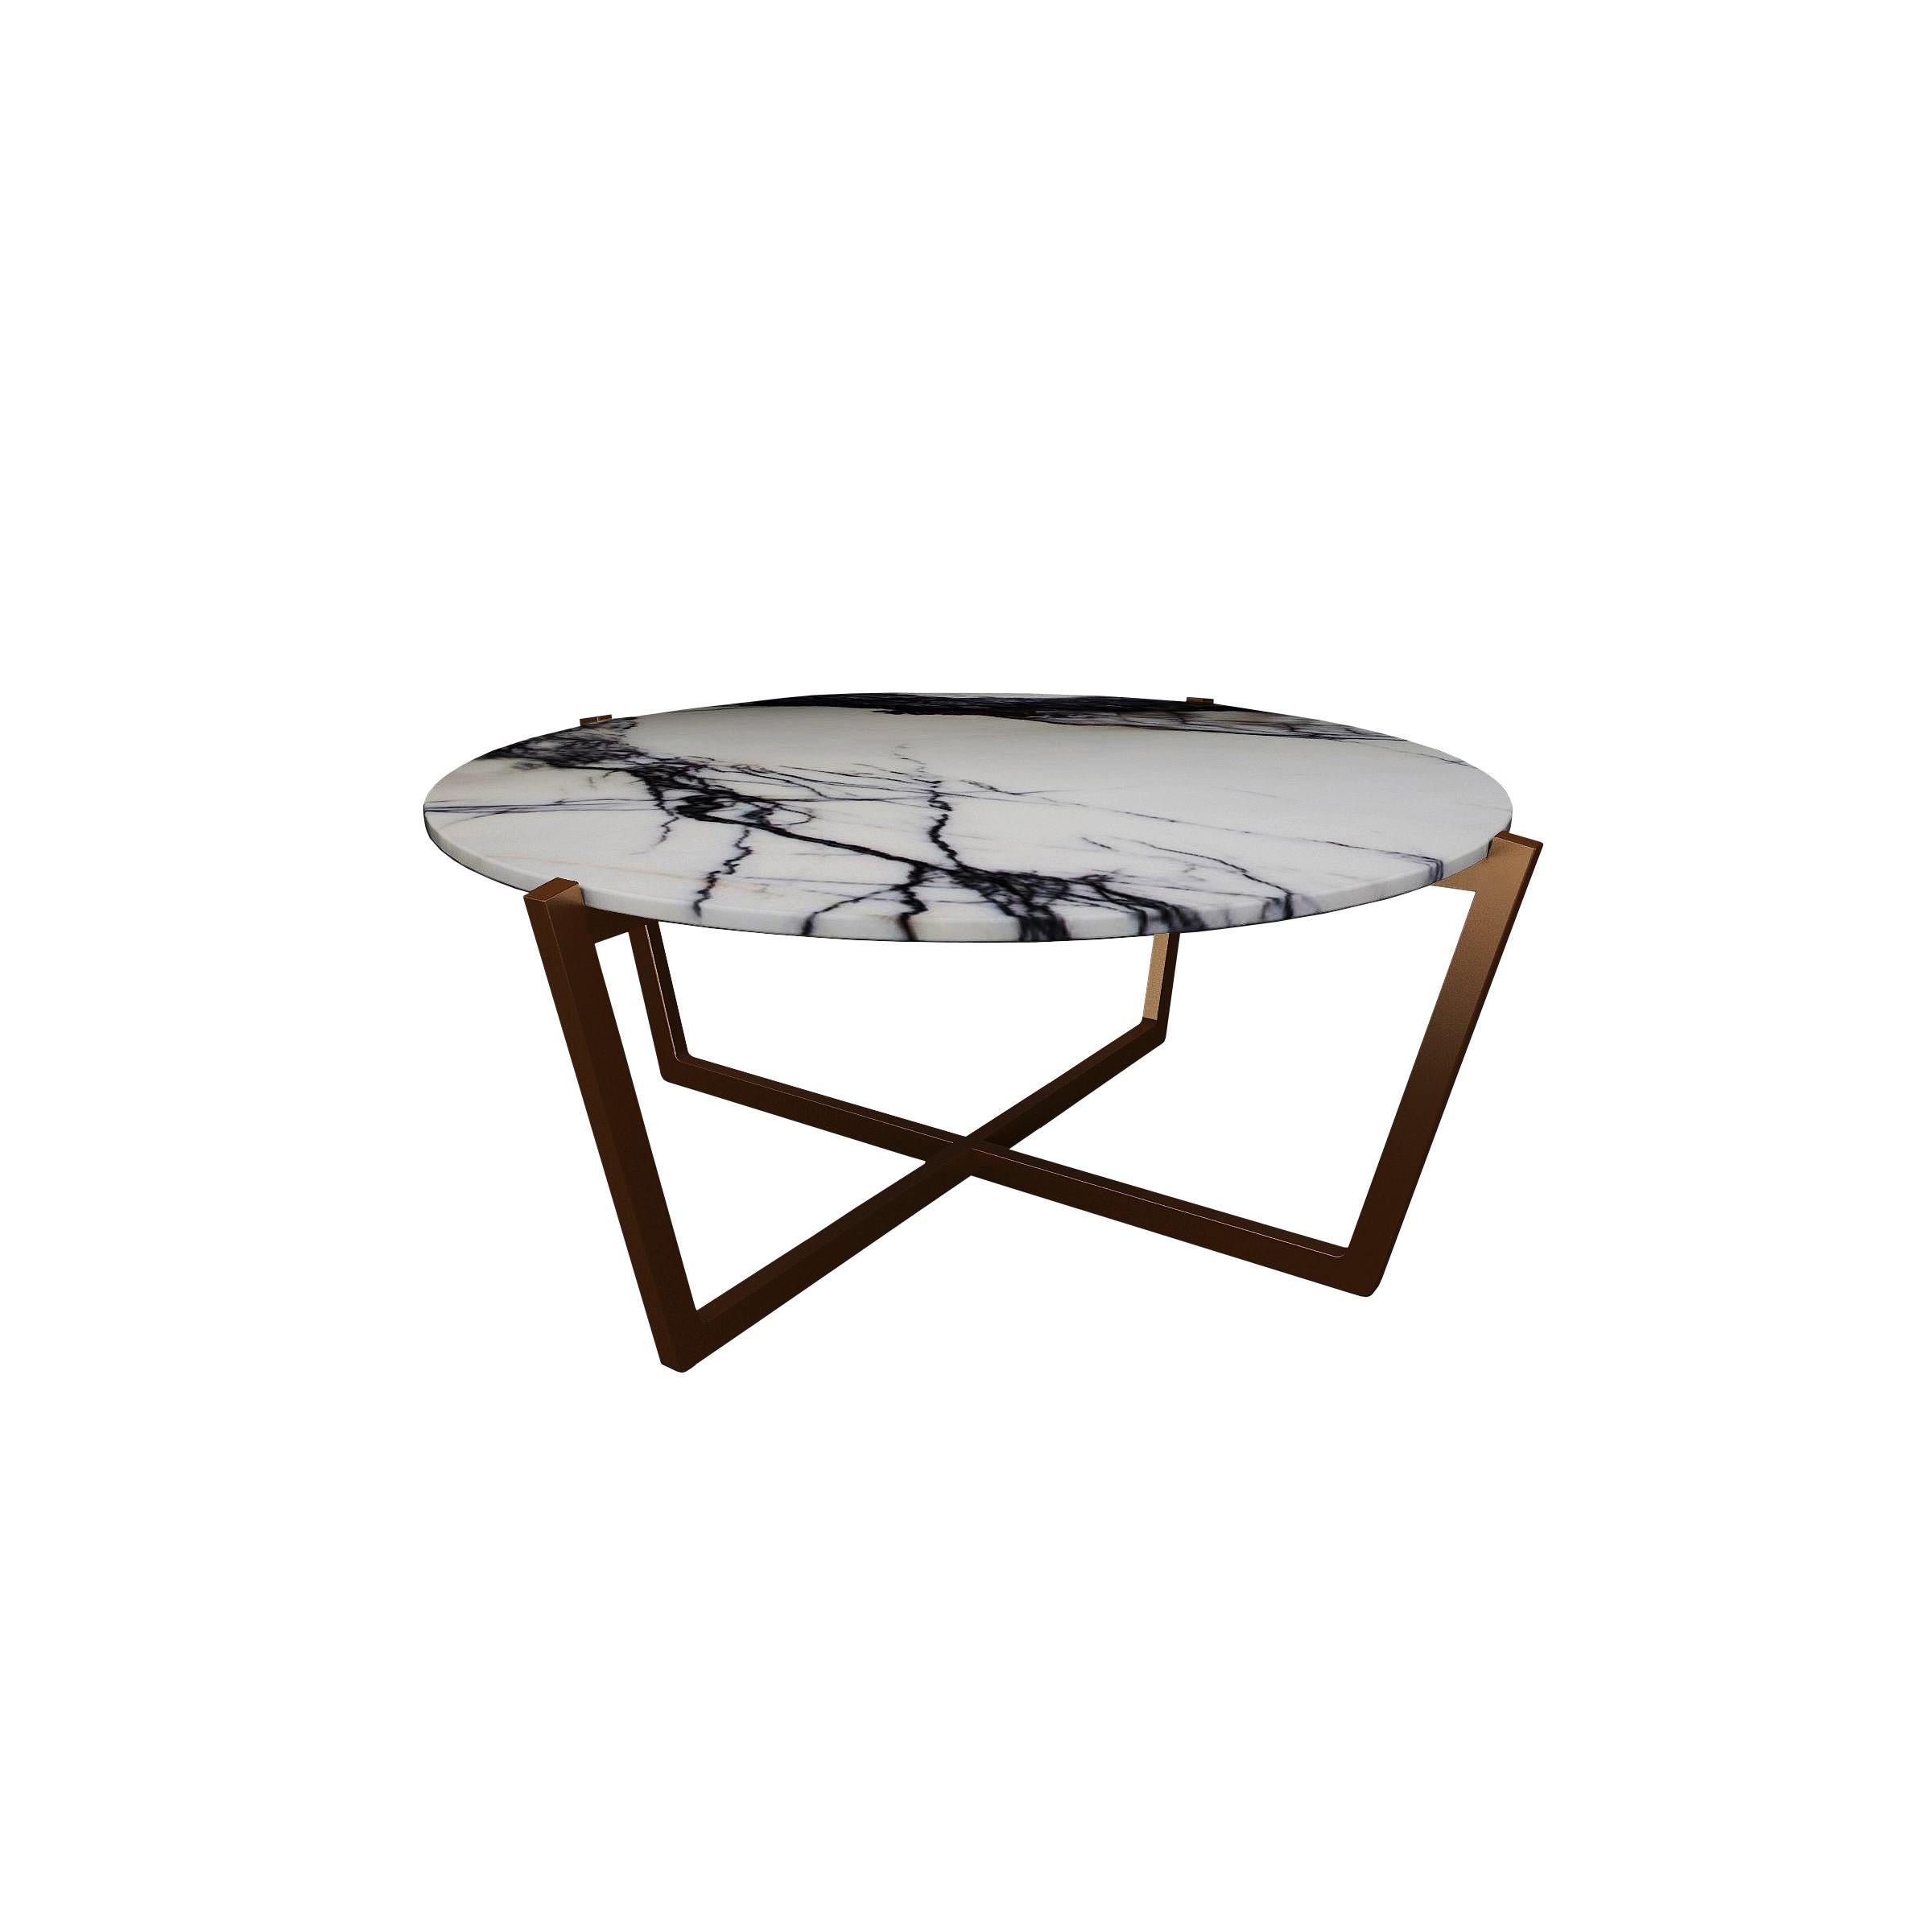 Scandinavian Modern NORDST EMMA Coffee Table, Italian Grey Rain Marble, Danish Modern Design, New For Sale